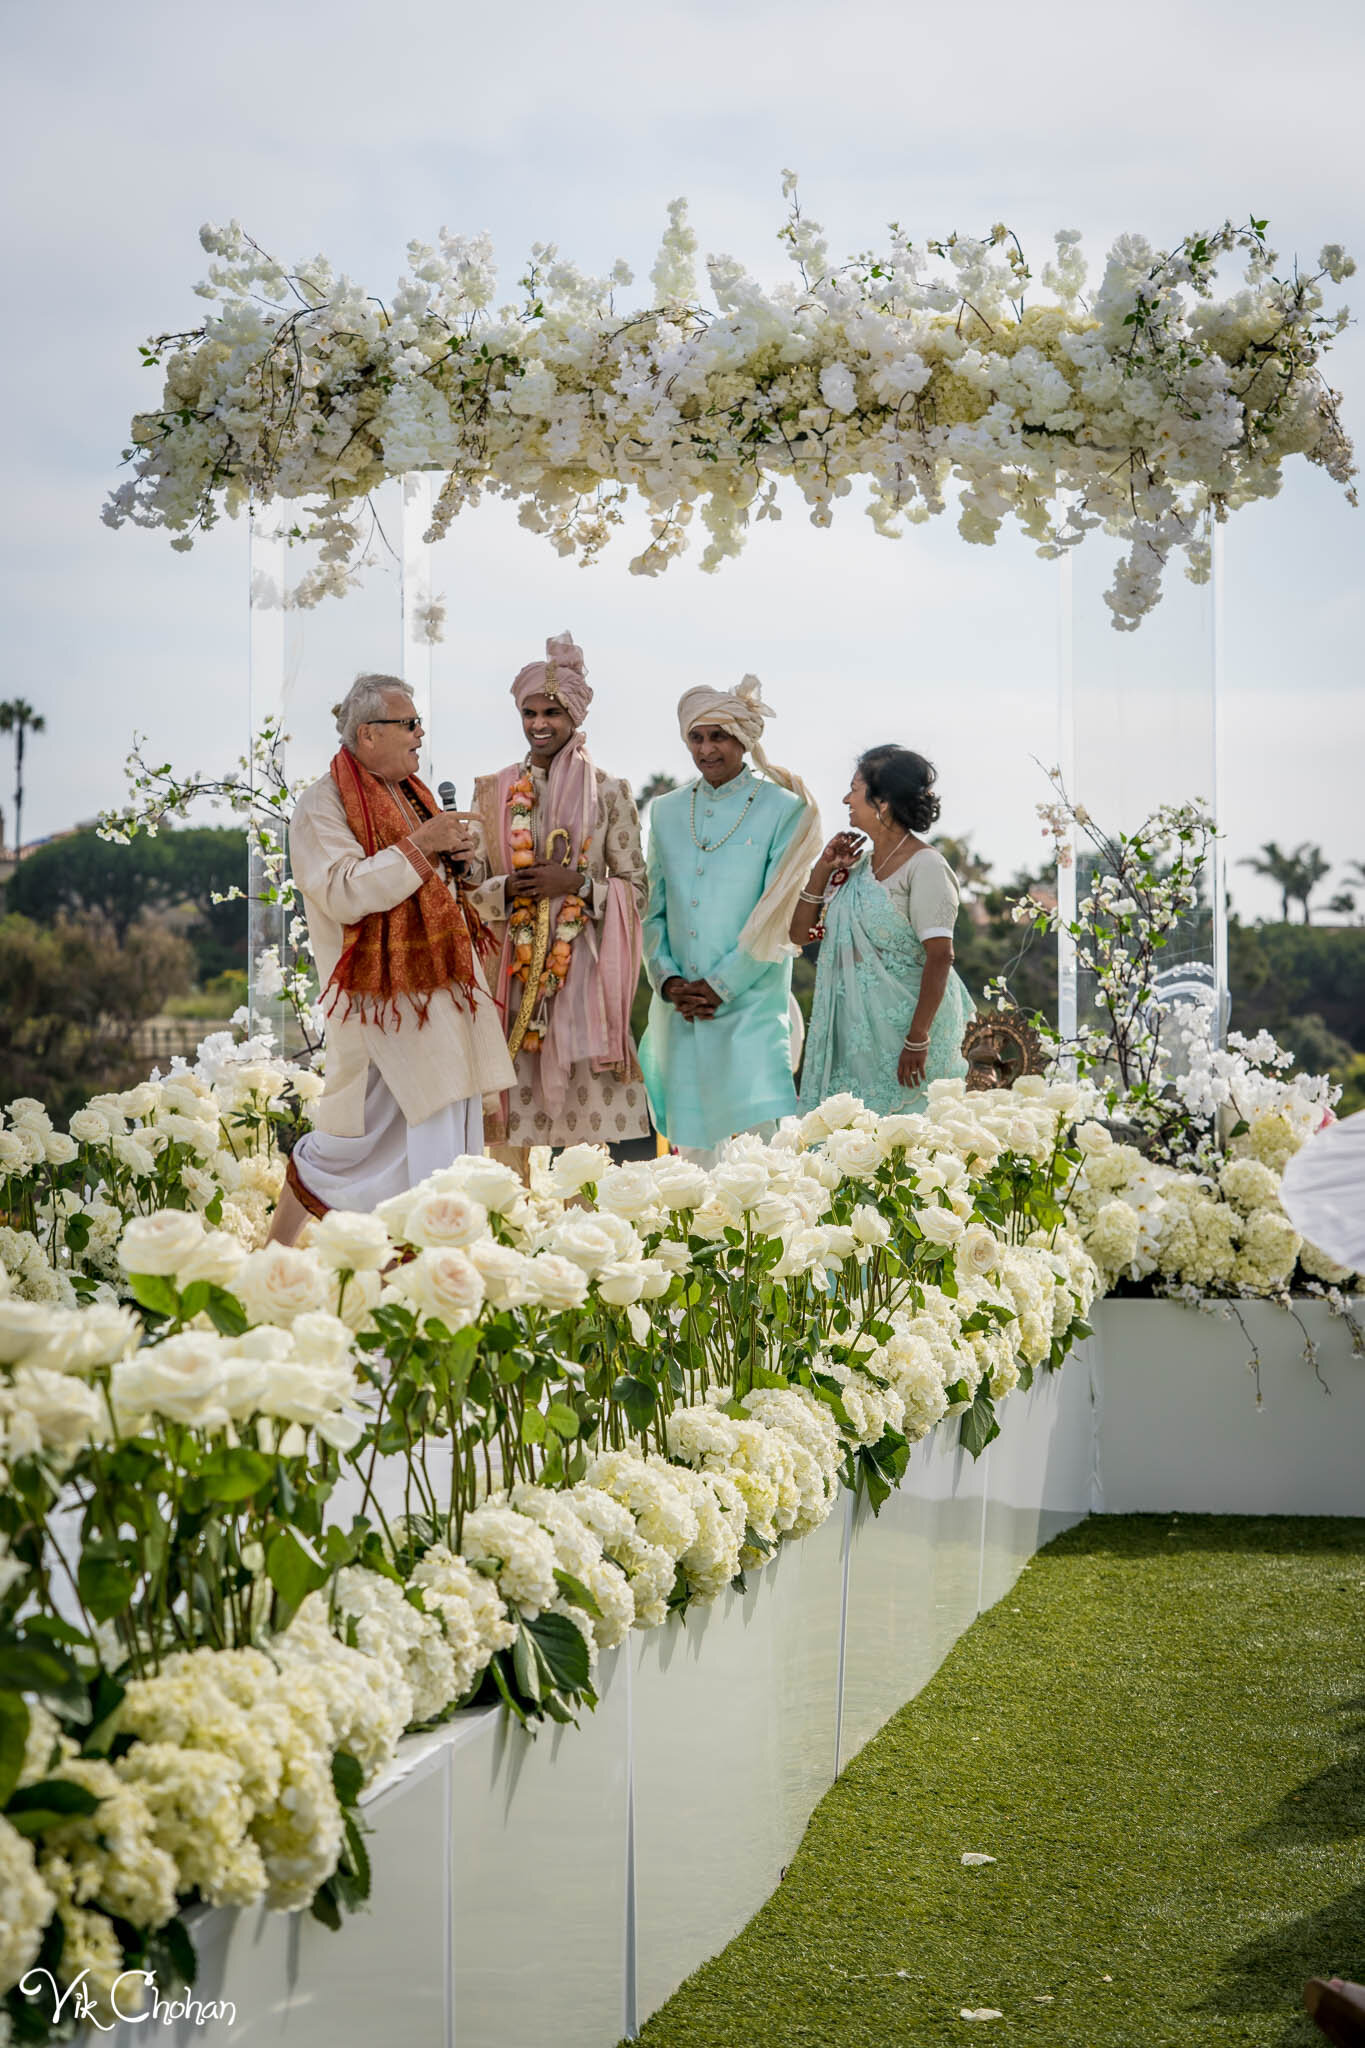 2021-07-30-Shaan-&-Megha-Wedding-Vik-Chohan-Photography-Photo-Booth-Social-Media-VCP-284.jpg